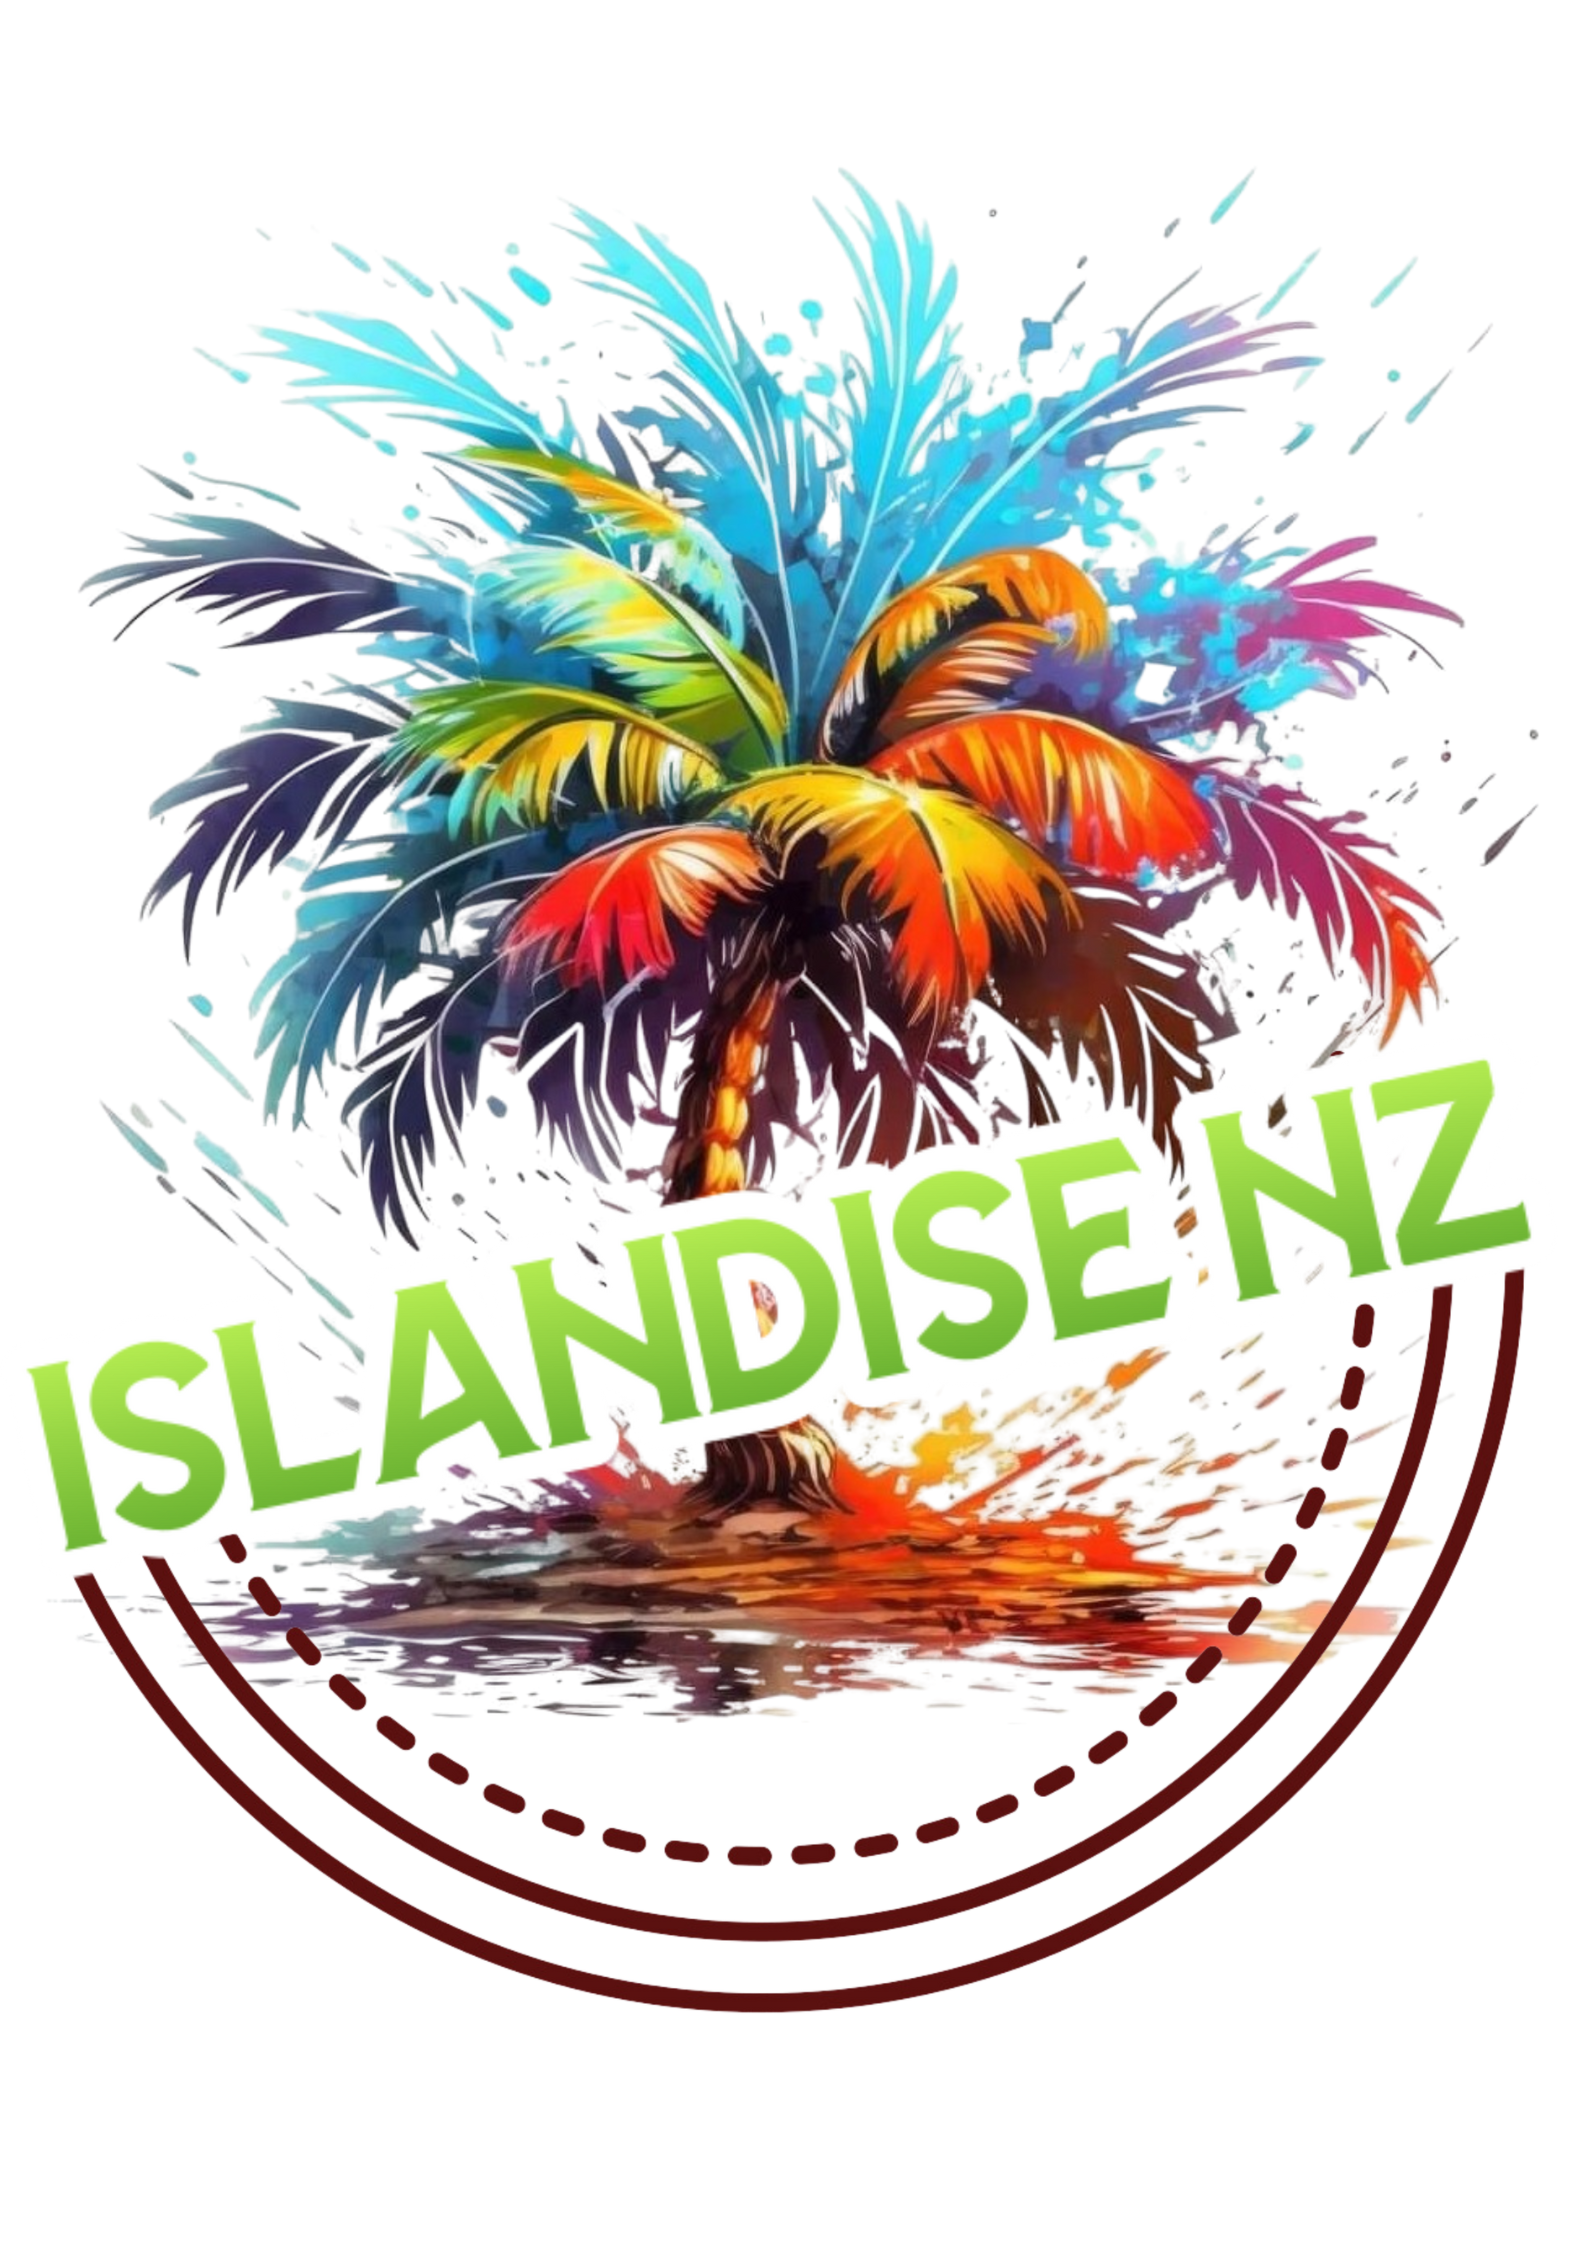 Islandise NZ